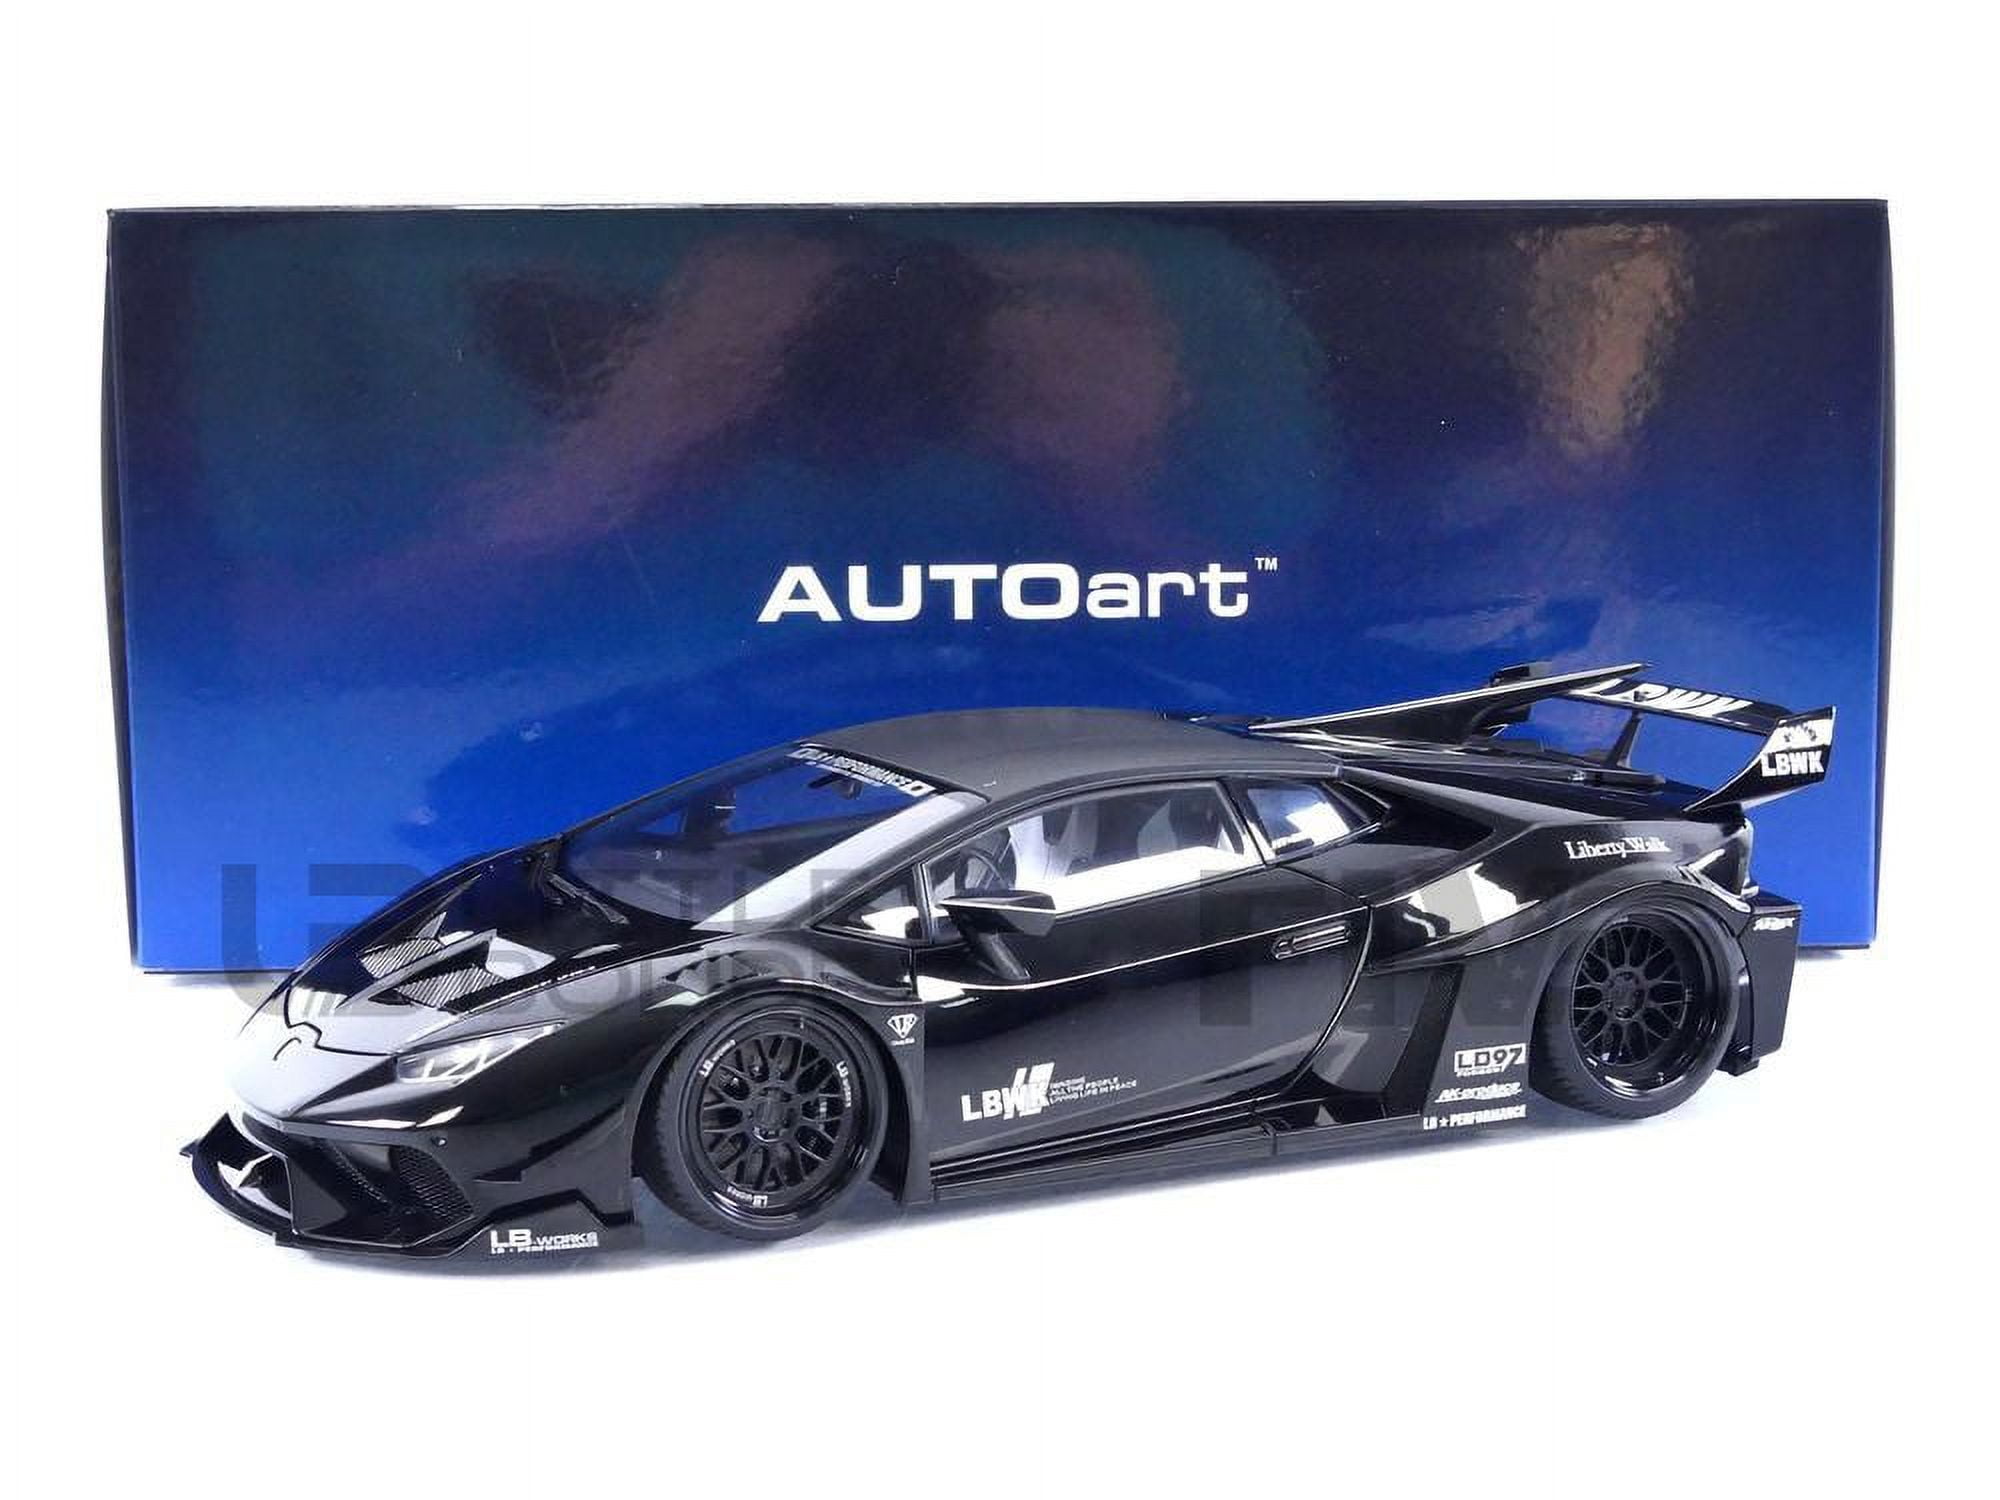 Picture of Autoart 79129 1-18 Scale Lamborghini Huracan GT LB-Silhouette Works Black Model Car